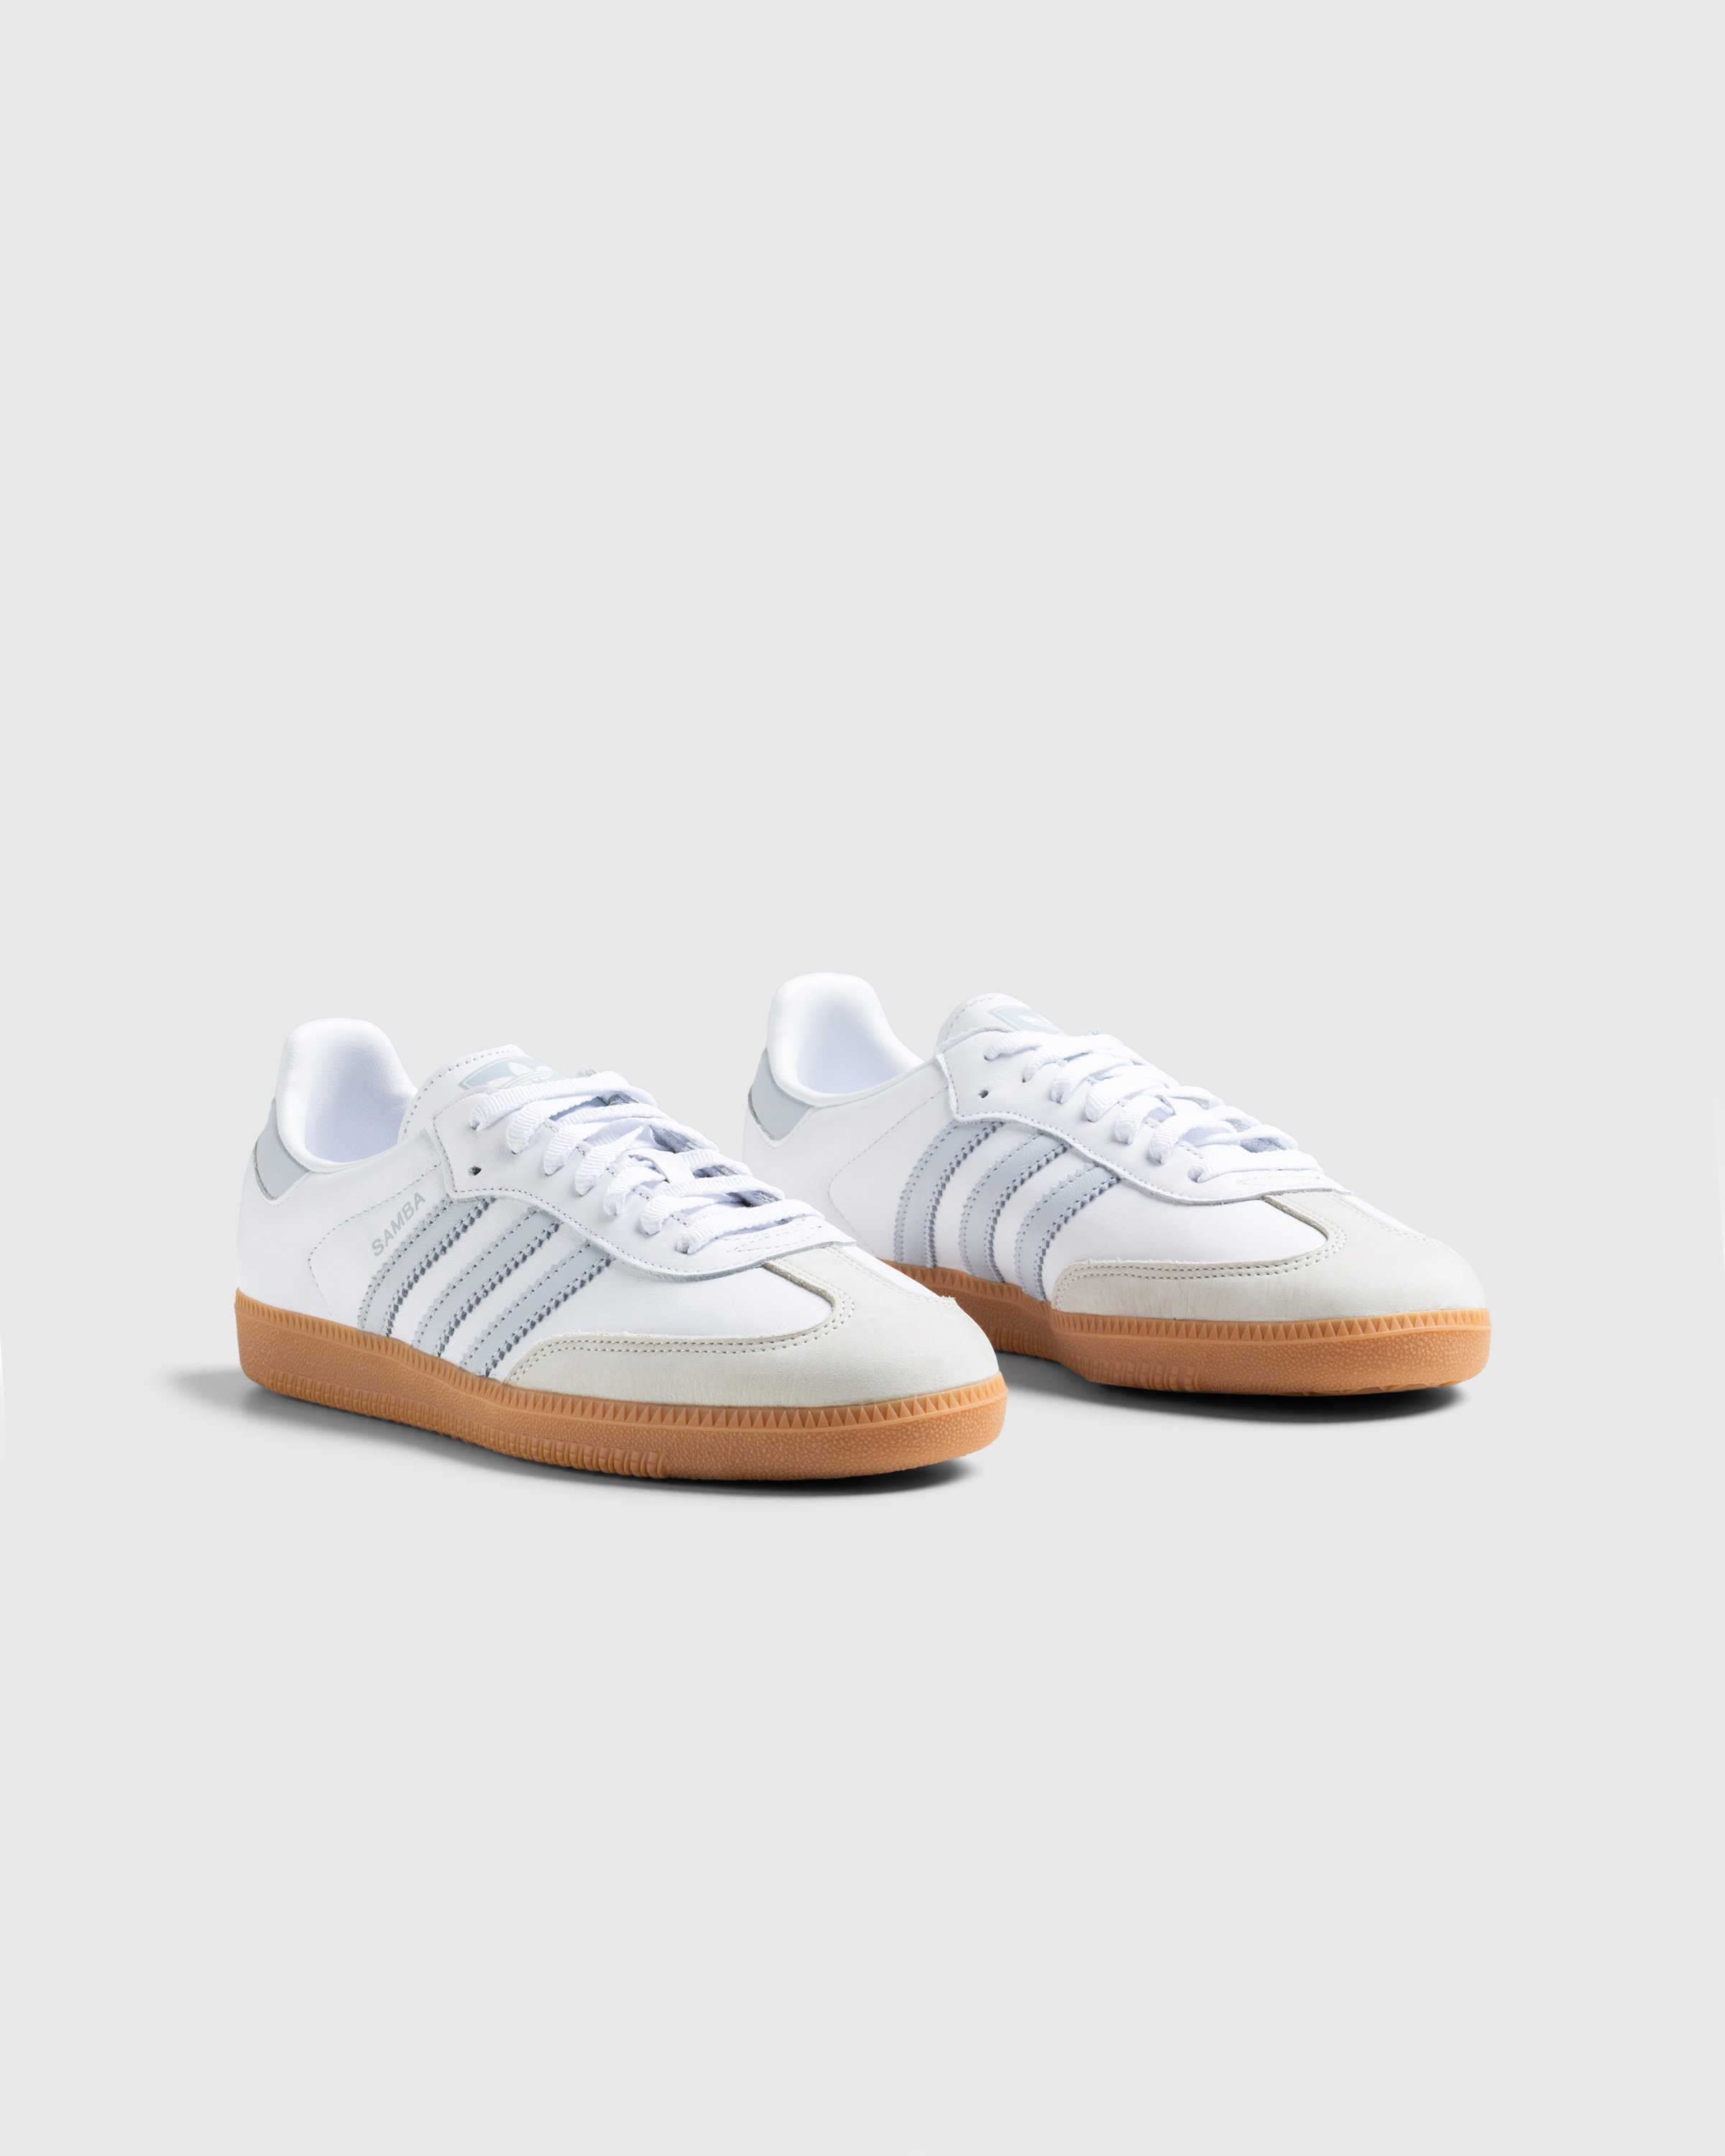 Adidas - Samba Og W          Ftwwht/Halblu/Owhite - Footwear - White - Image 3